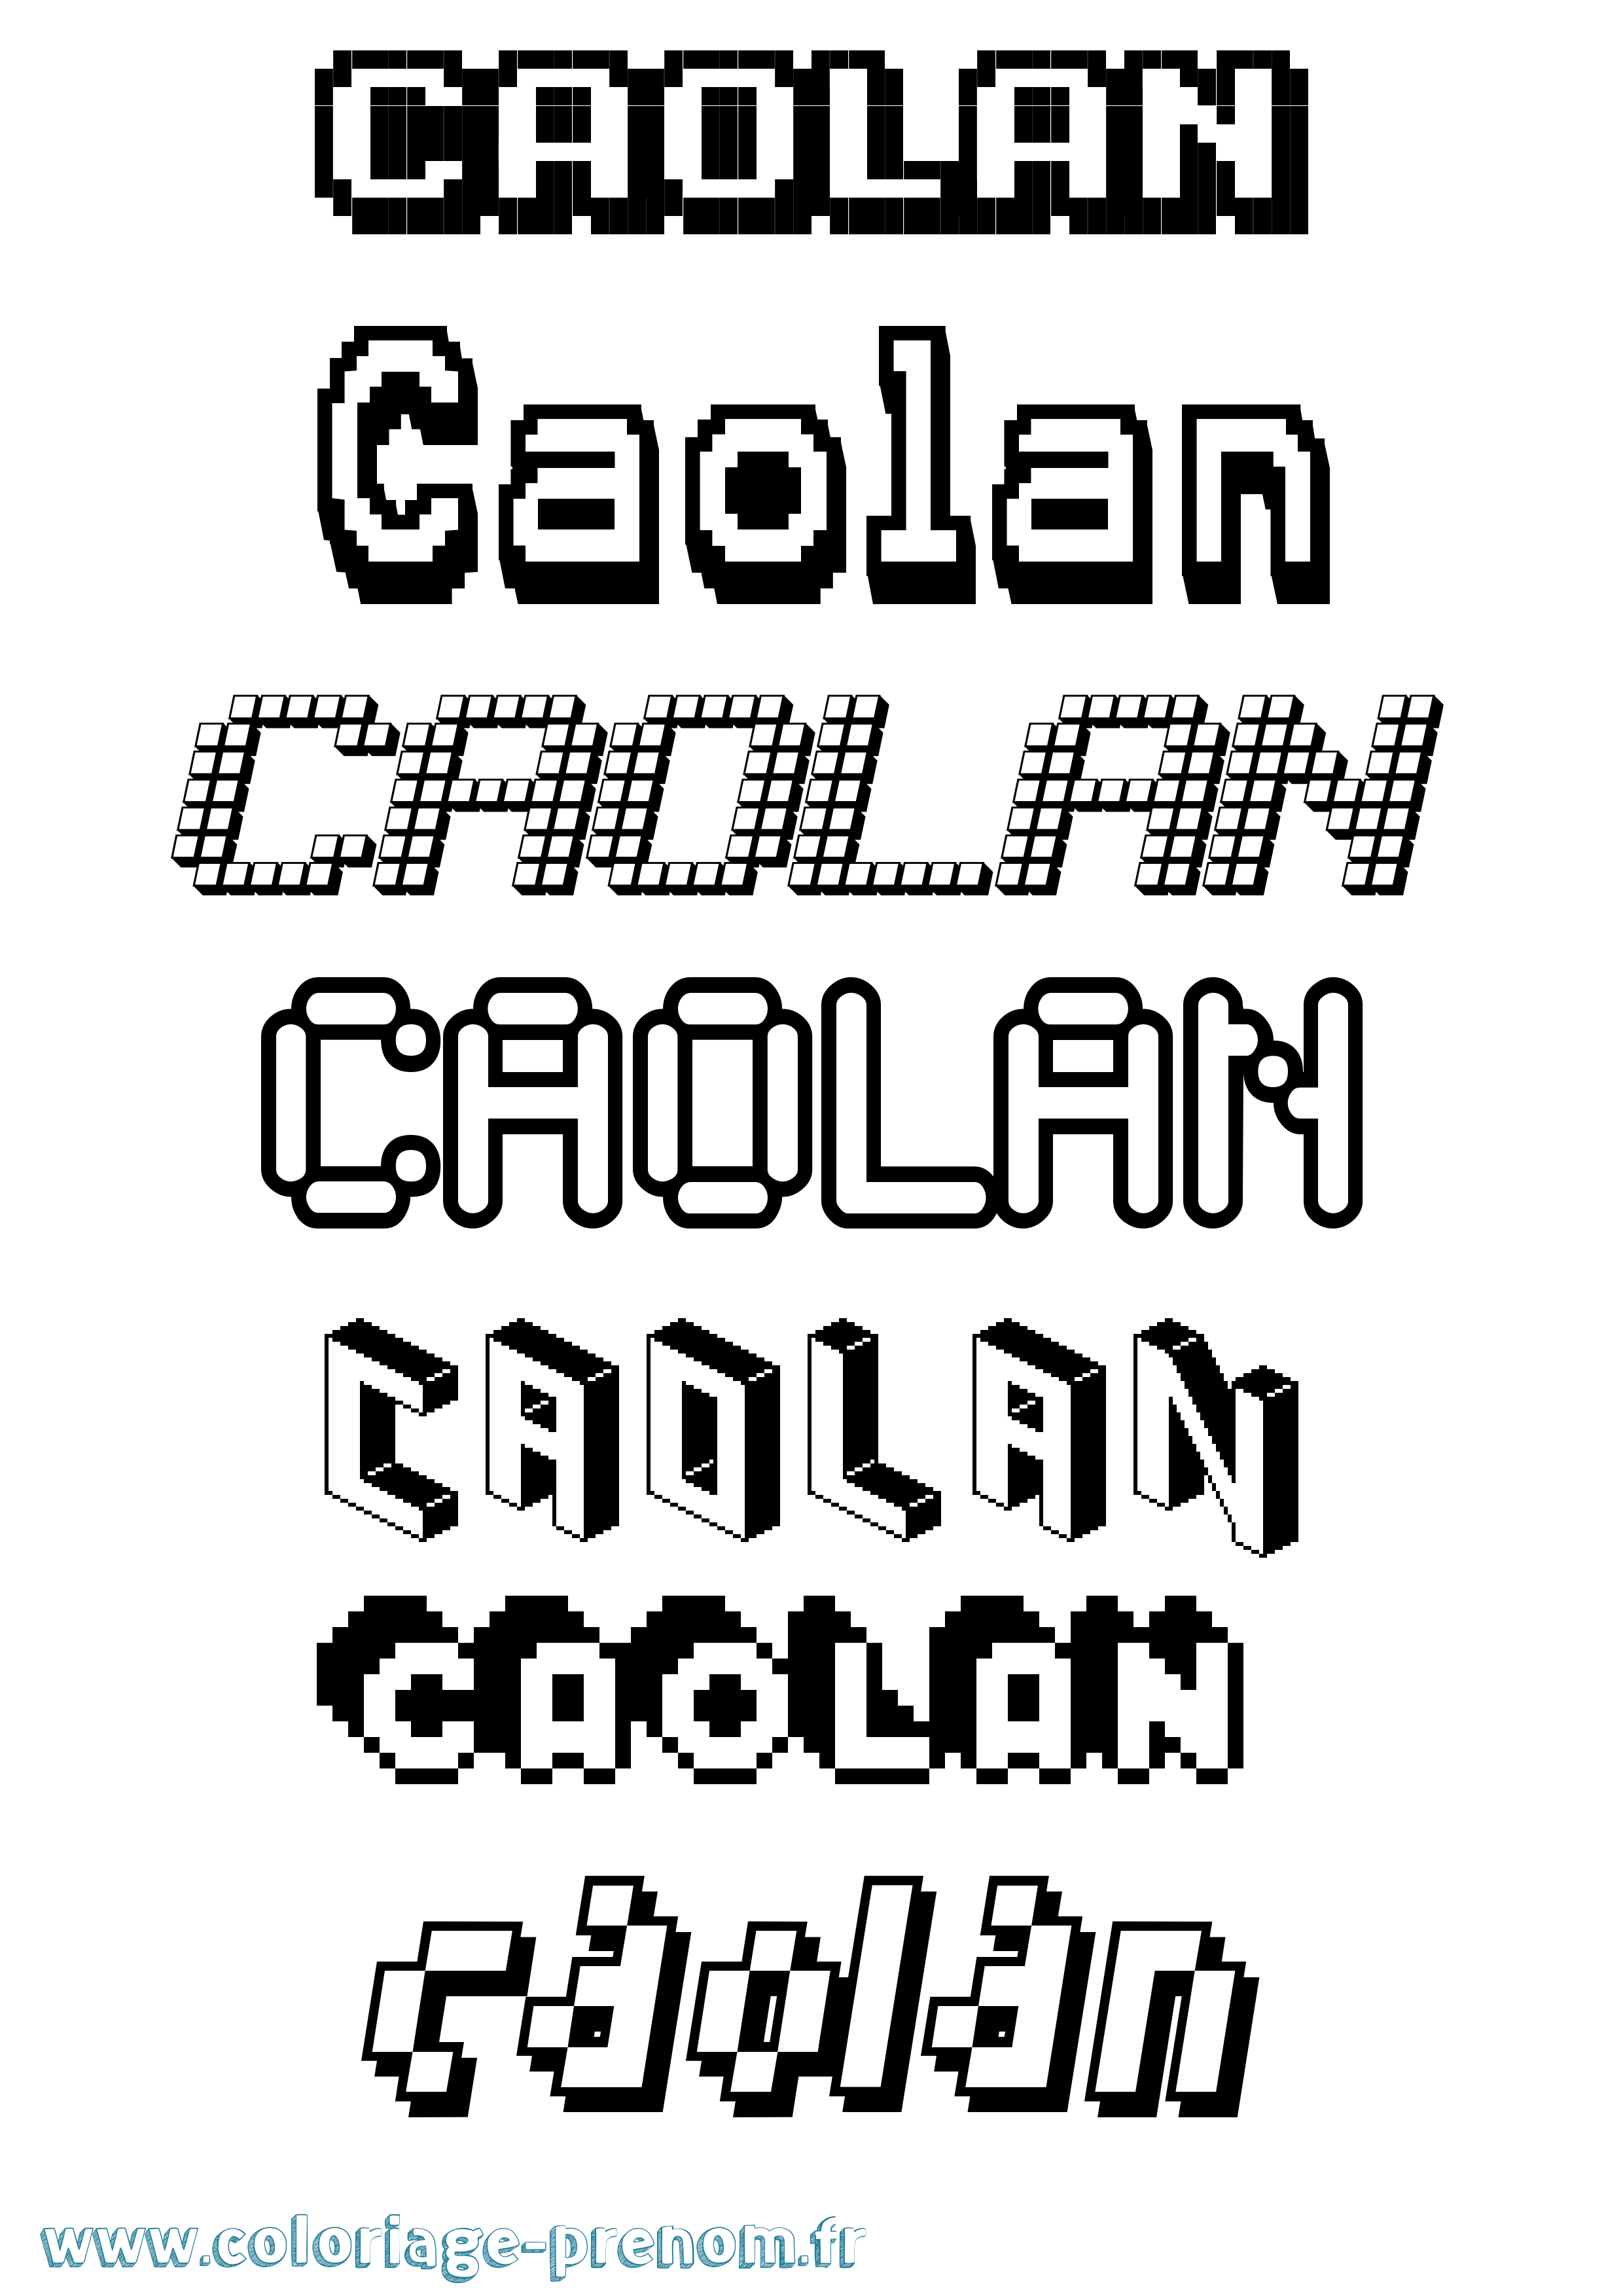 Coloriage prénom Caolan Pixel